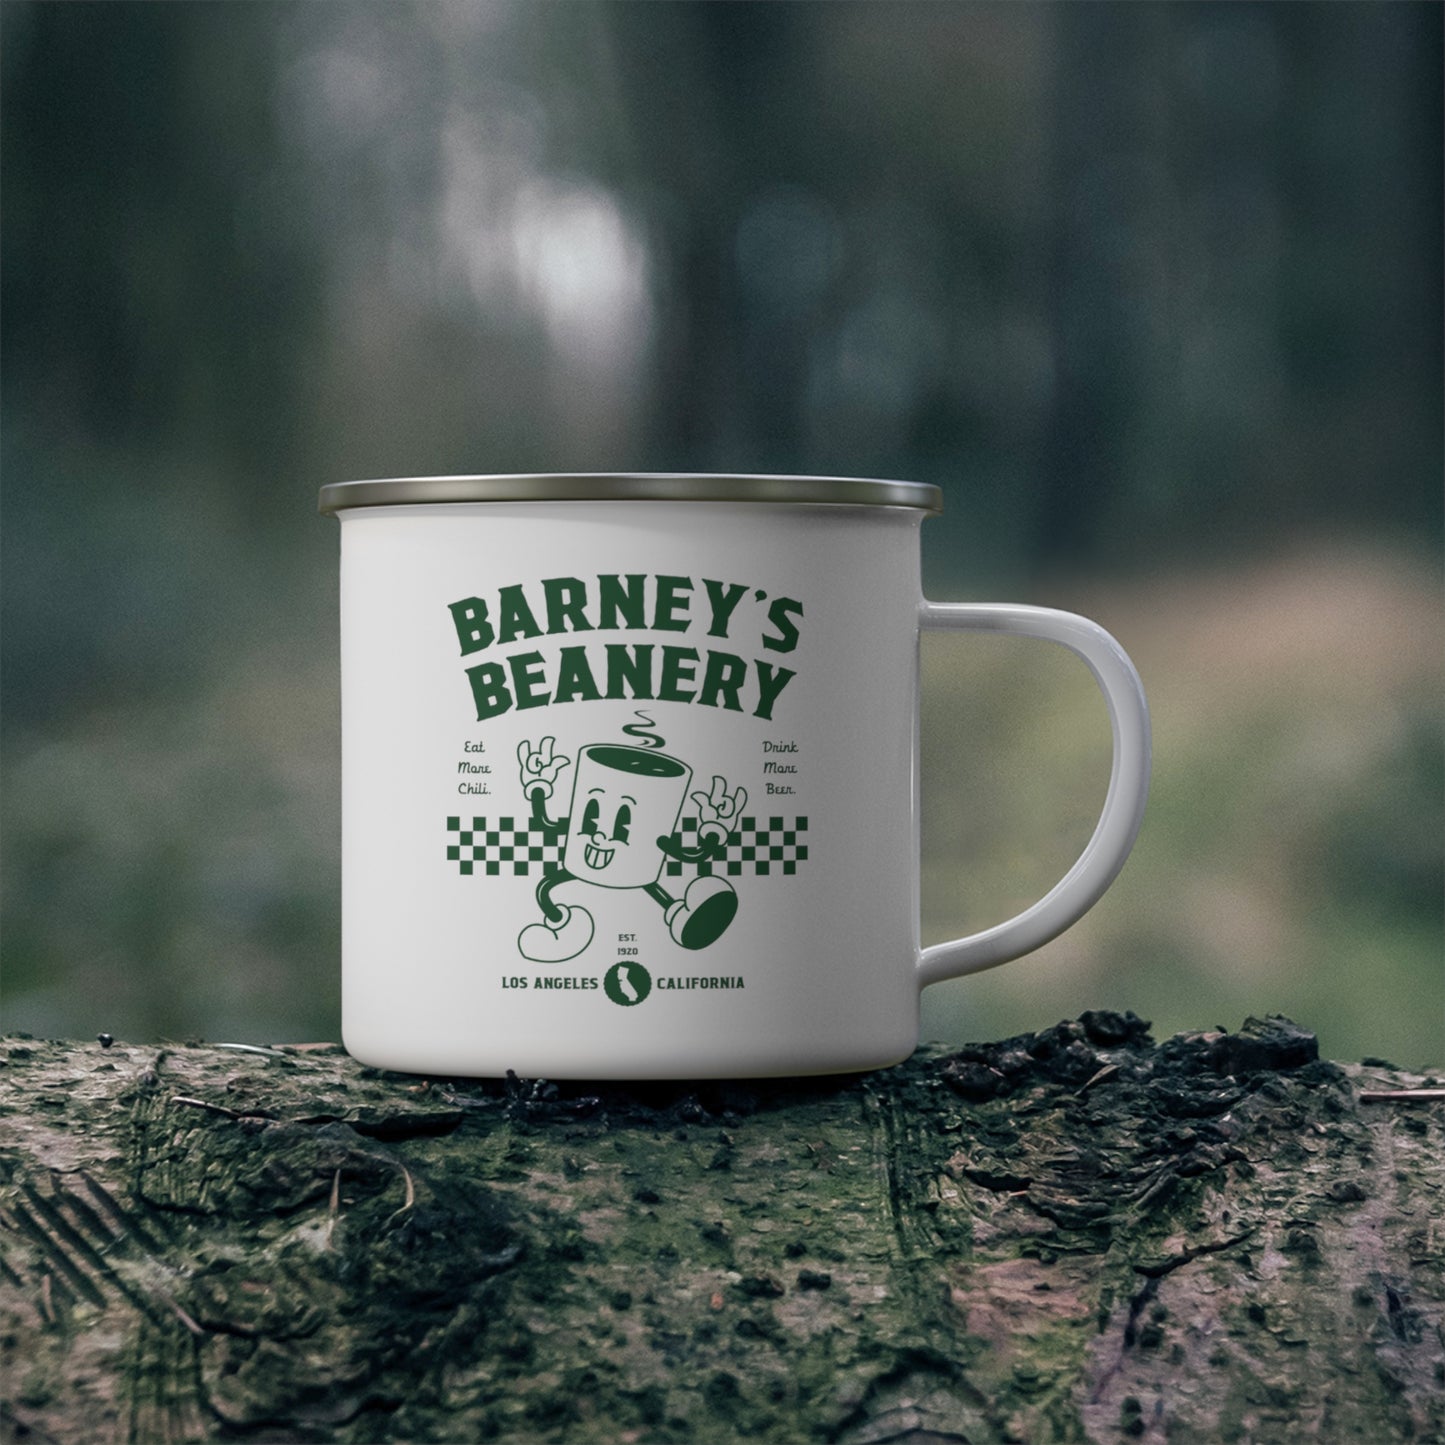 Eat More Chili. Drink More Beer. | BARNEY'S BEANERY - Green Camping Mug 12oz